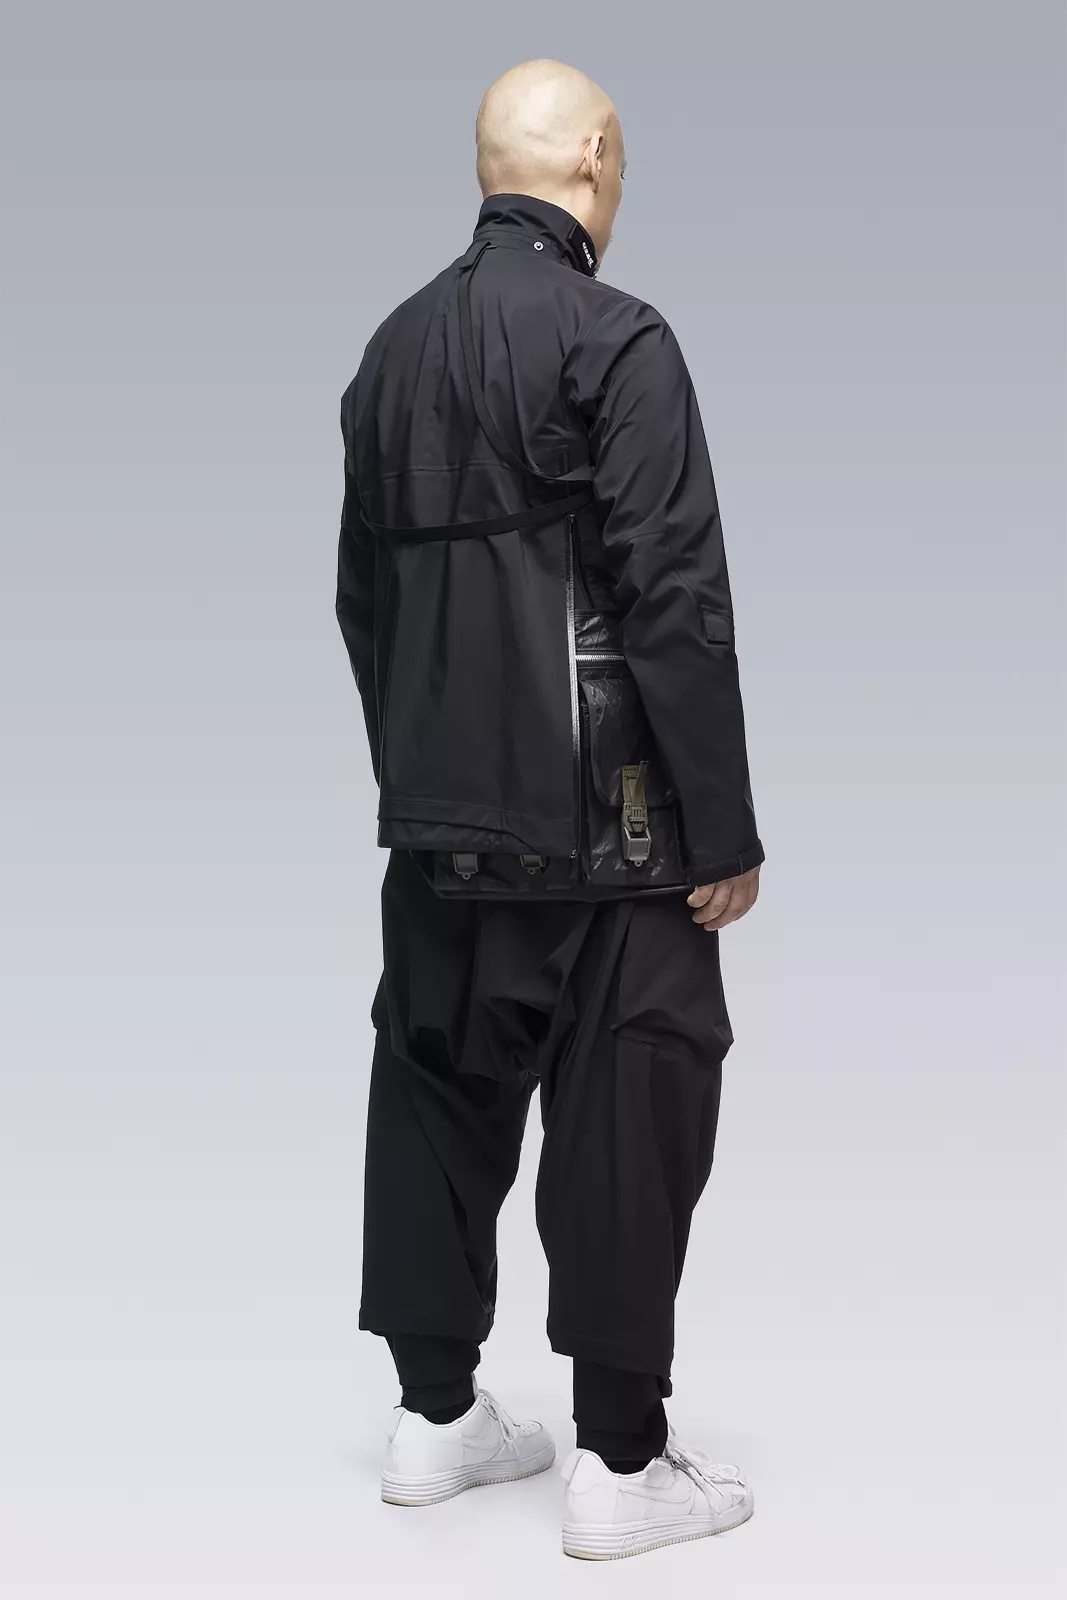 J1A-GTKR-BKS KR EX 3L Gore-Tex® Pro Interops Jacket Black with size 5 WR zippers in gloss black - 39